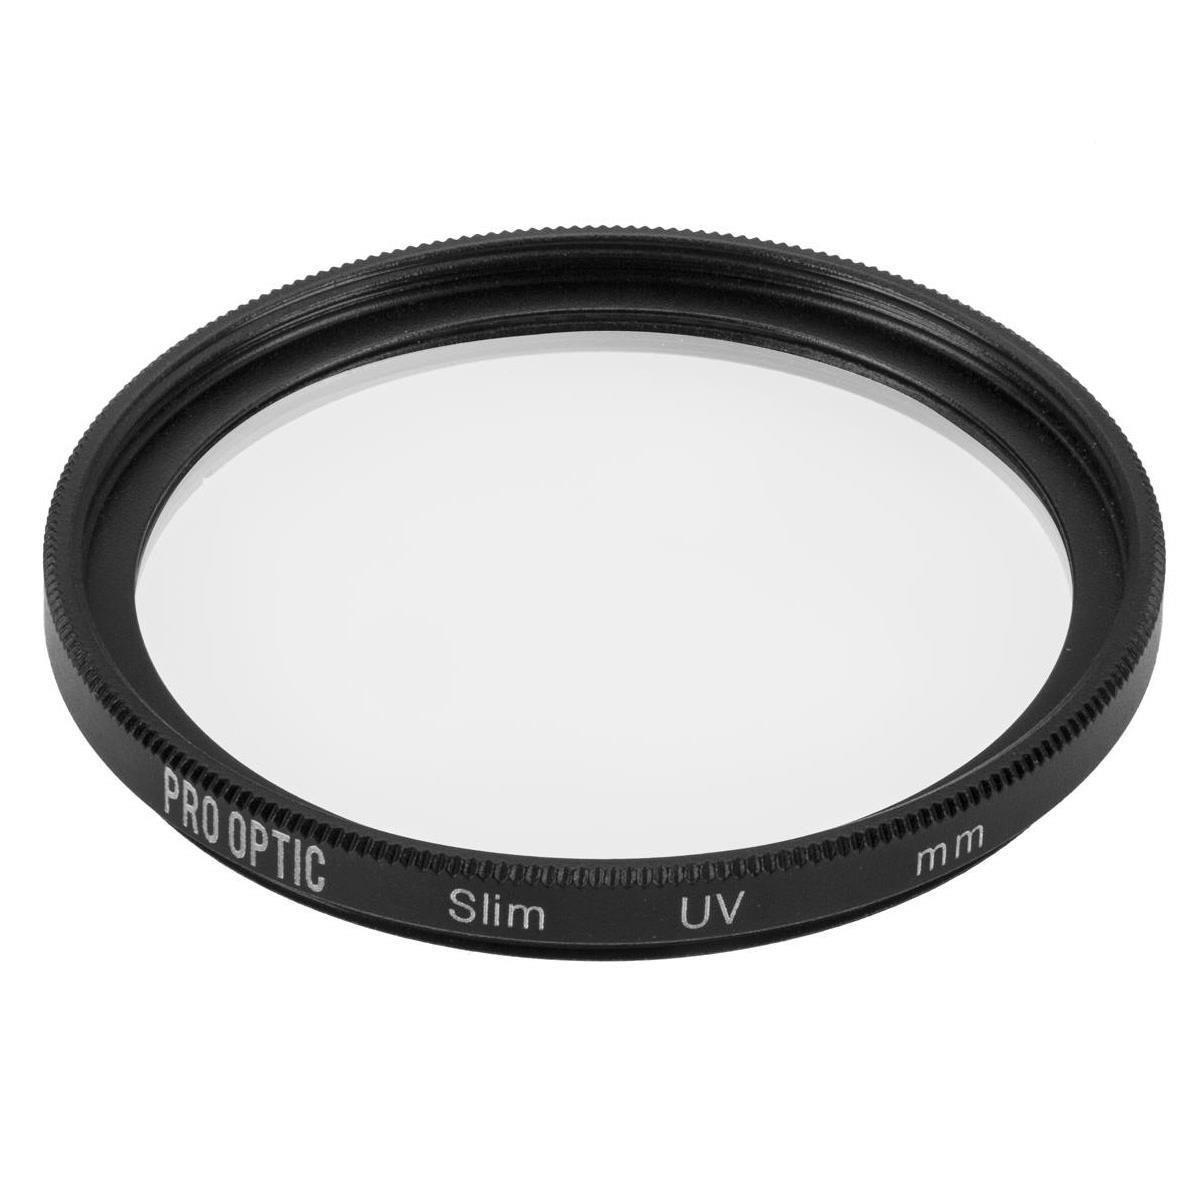 ProOPTIC Pro Digital 77mm Multi Coated UV Slim Filter цена и фото